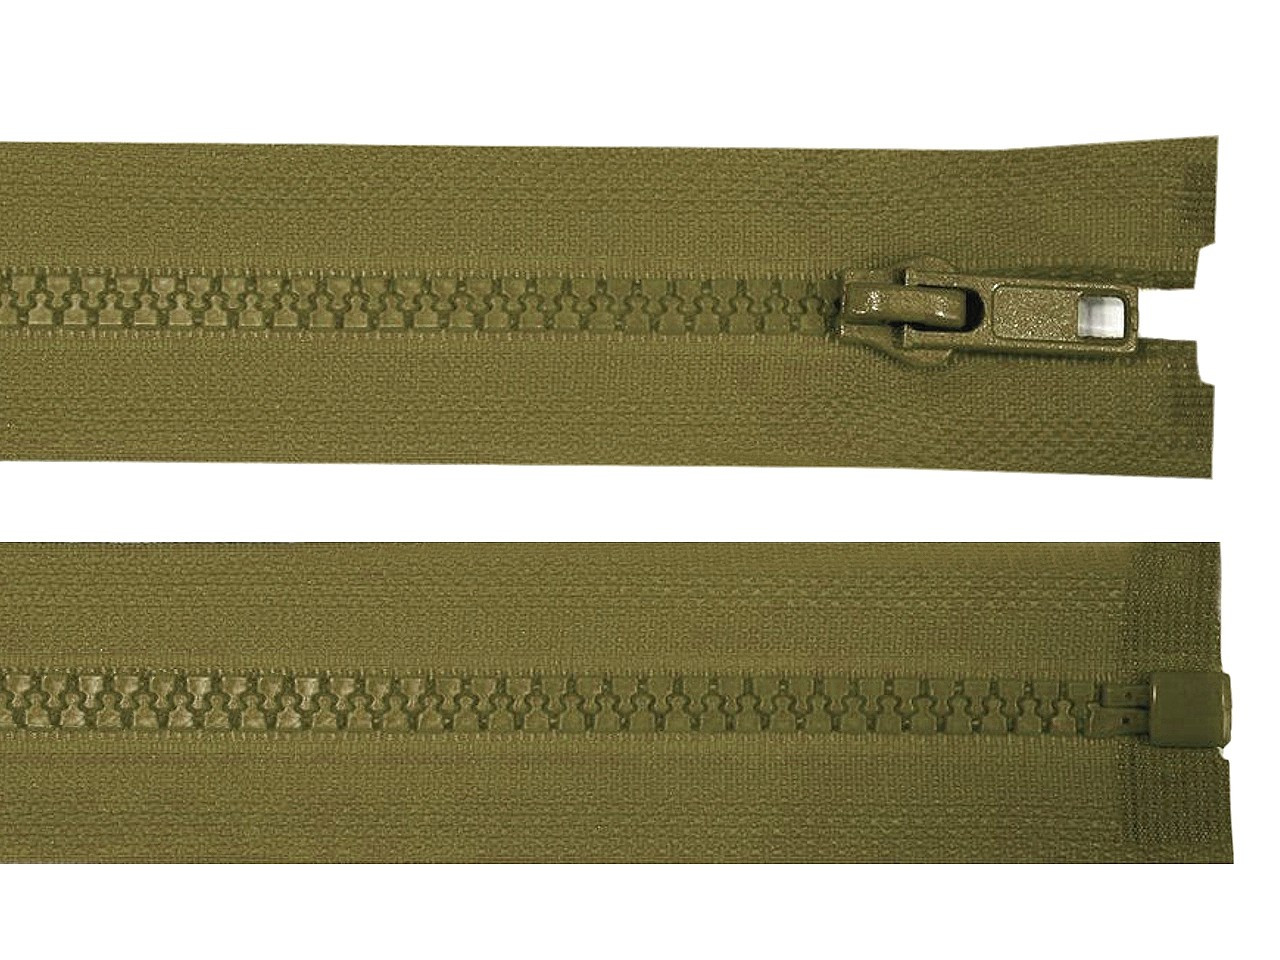 Kostěný zip No 5 délka 60 cm bundový, barva 298 zelená khaki tmavá